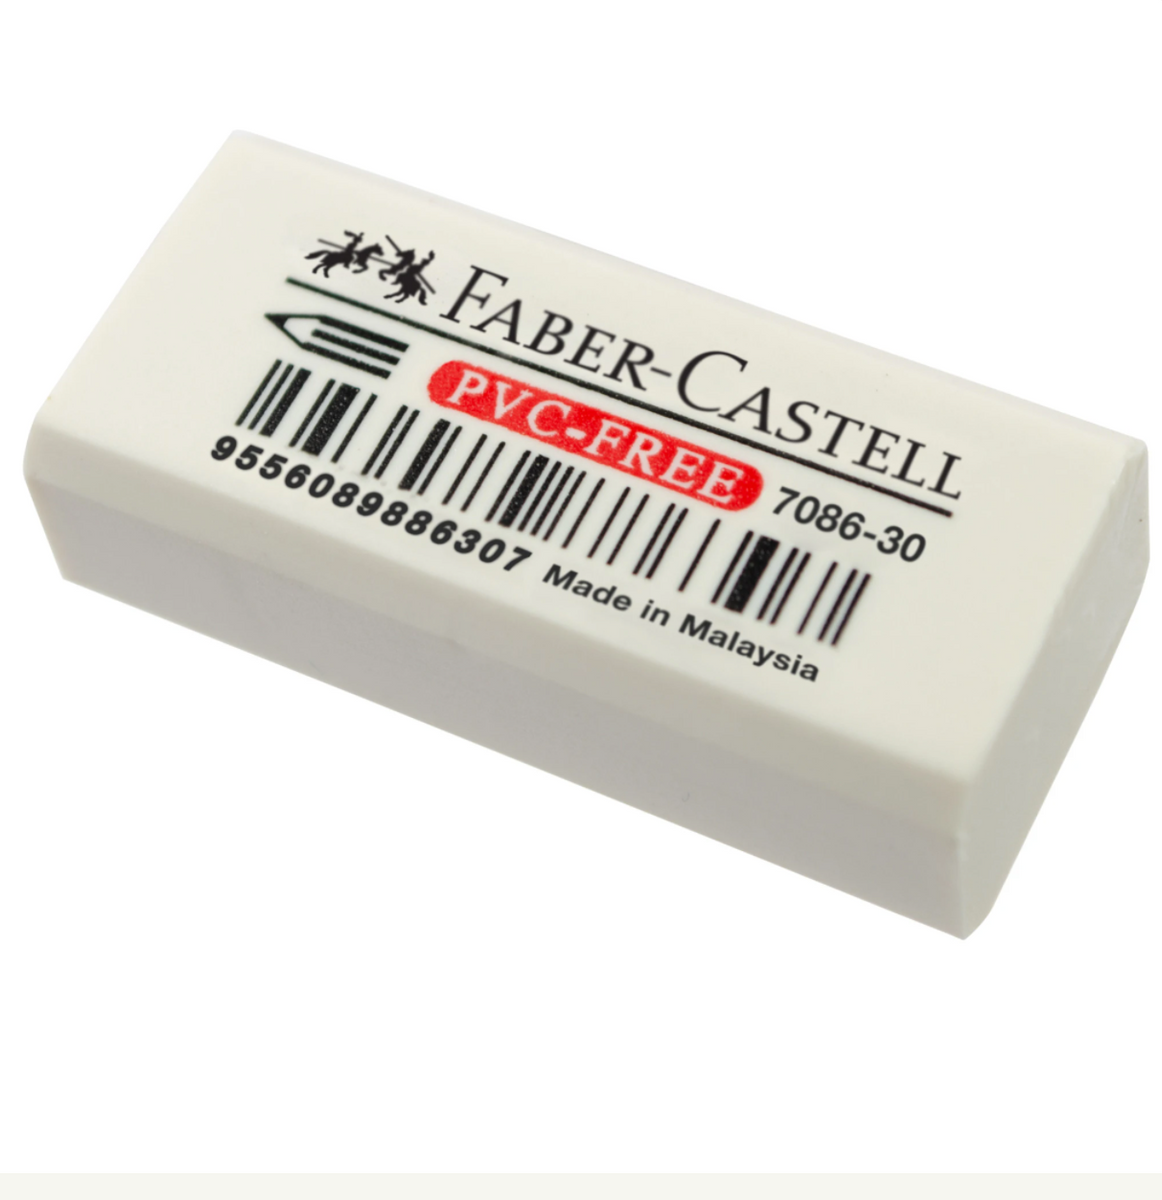 Faber-Castell Dust-free Art eraser